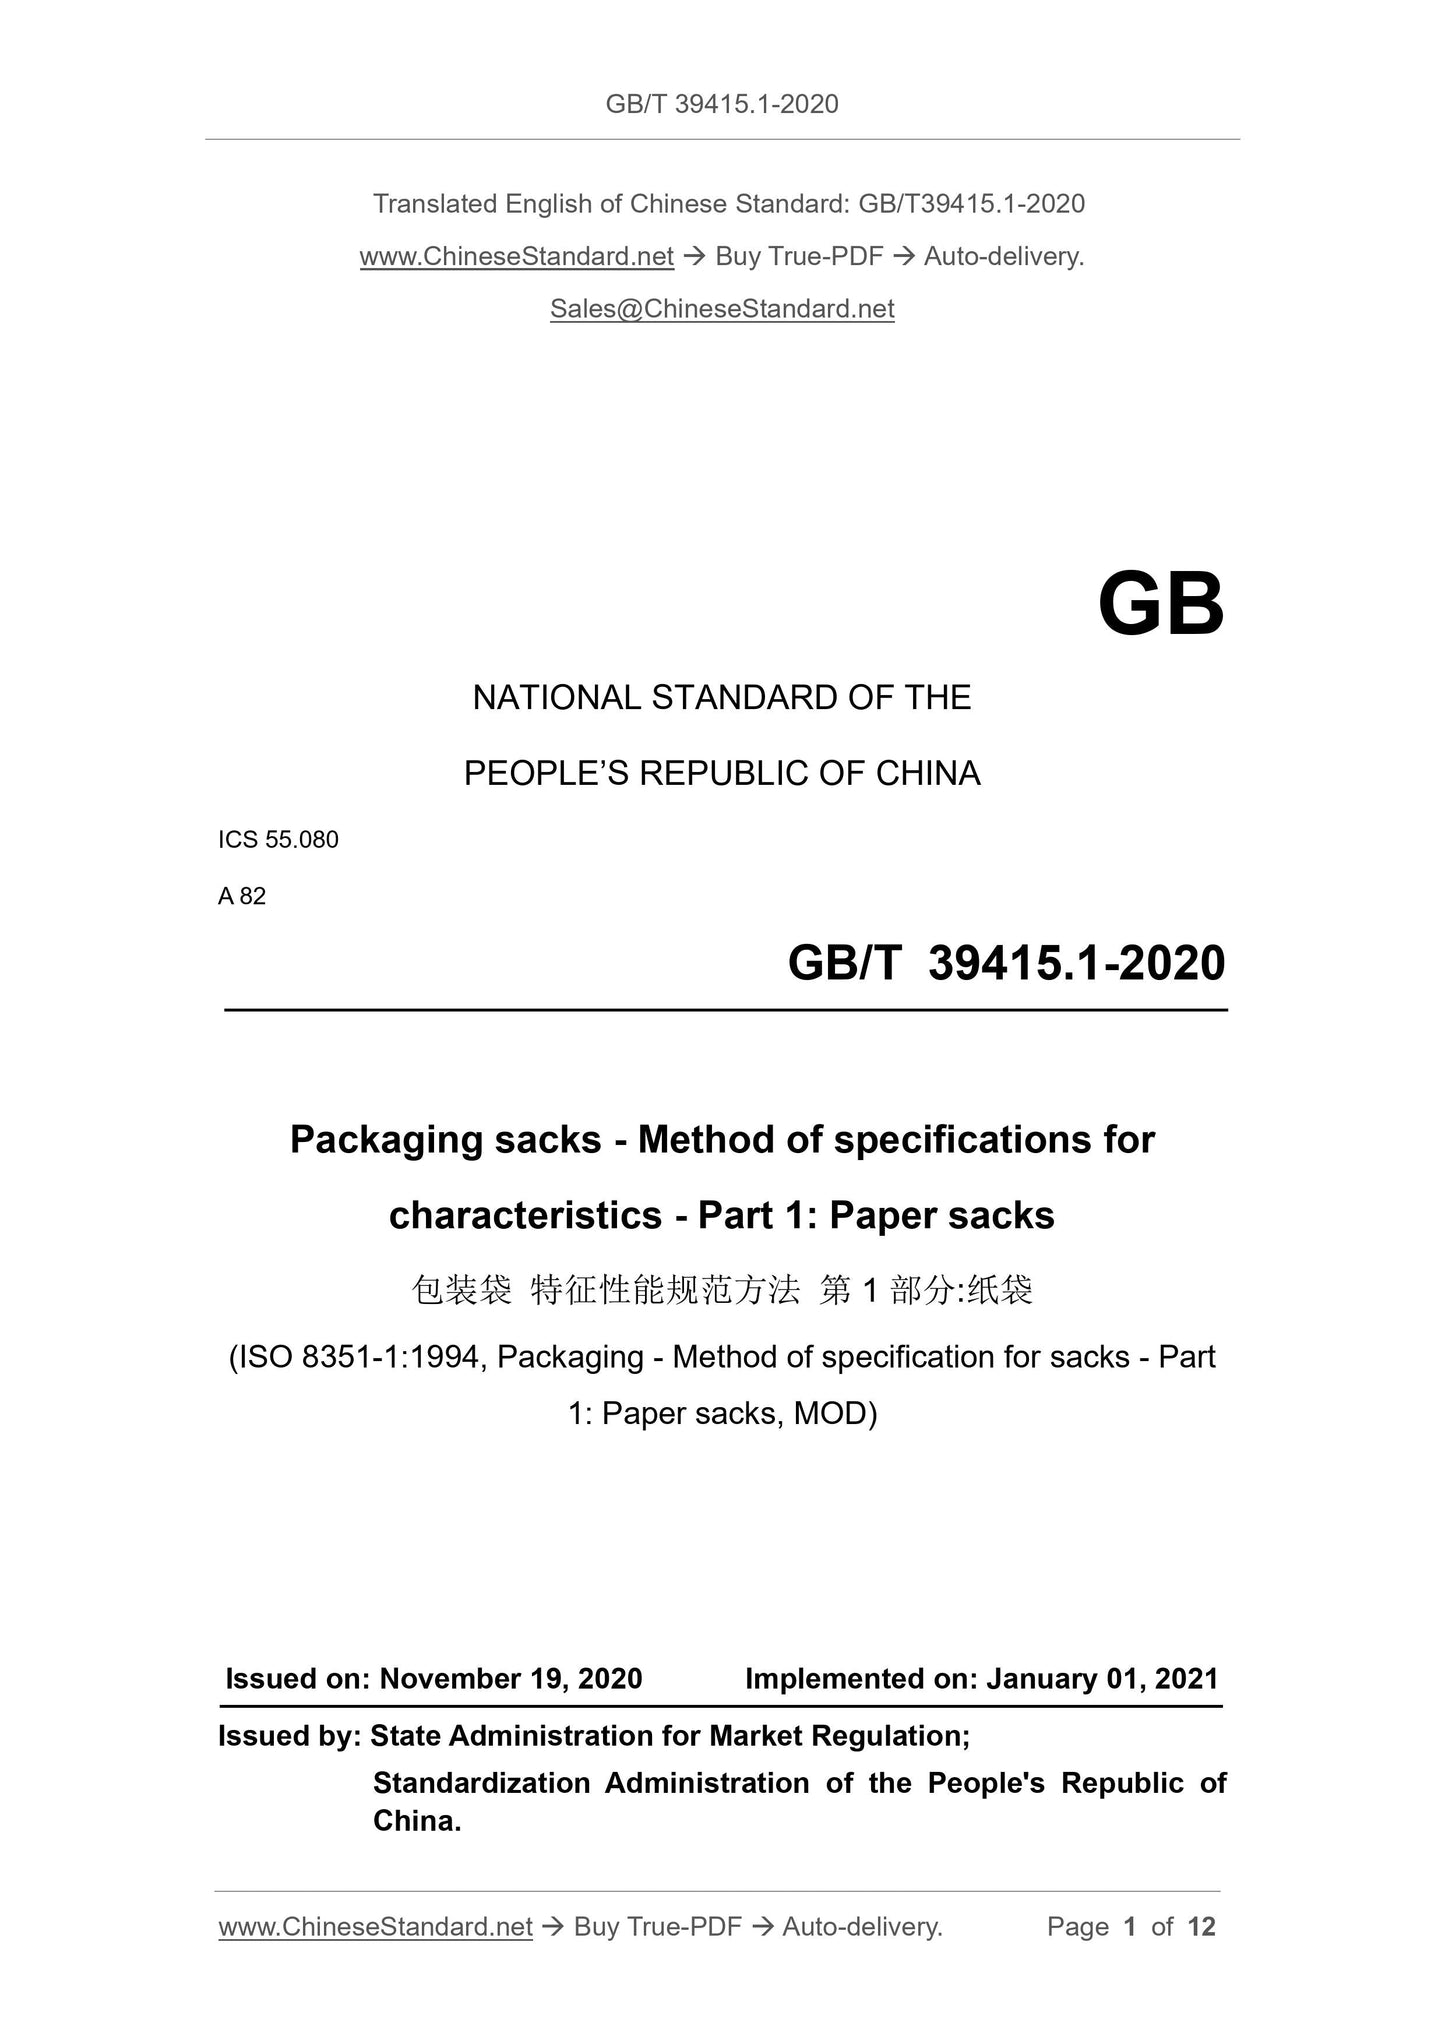 GBT39415.1-2020 Page 1